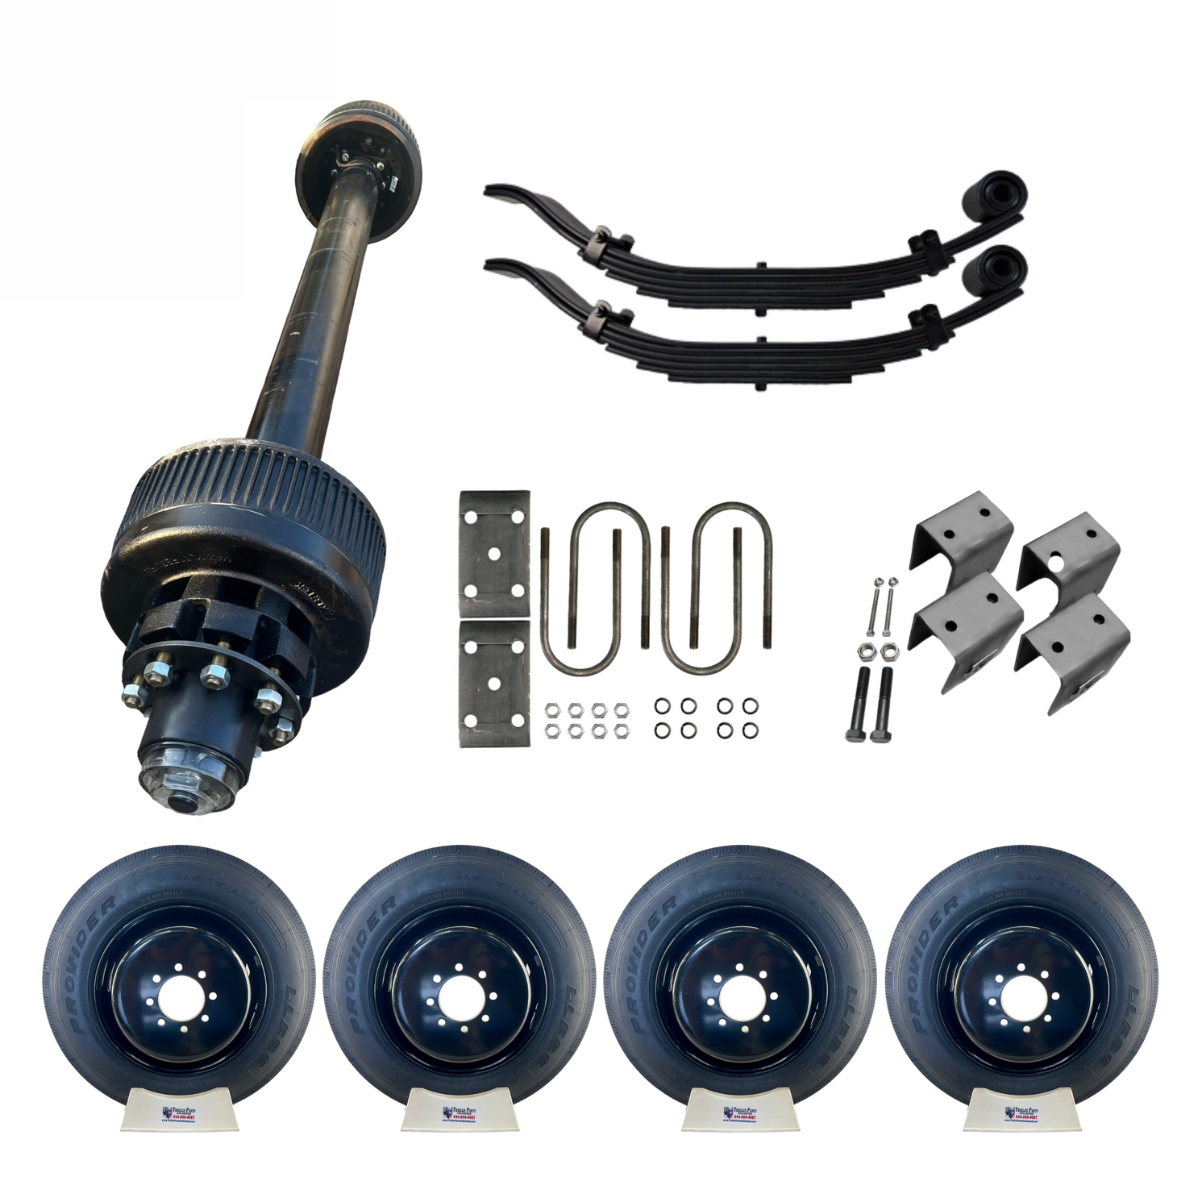 12,000 lb Carter Single Trailer Axle Tire Wheel Kit - 17.5" Black Duals